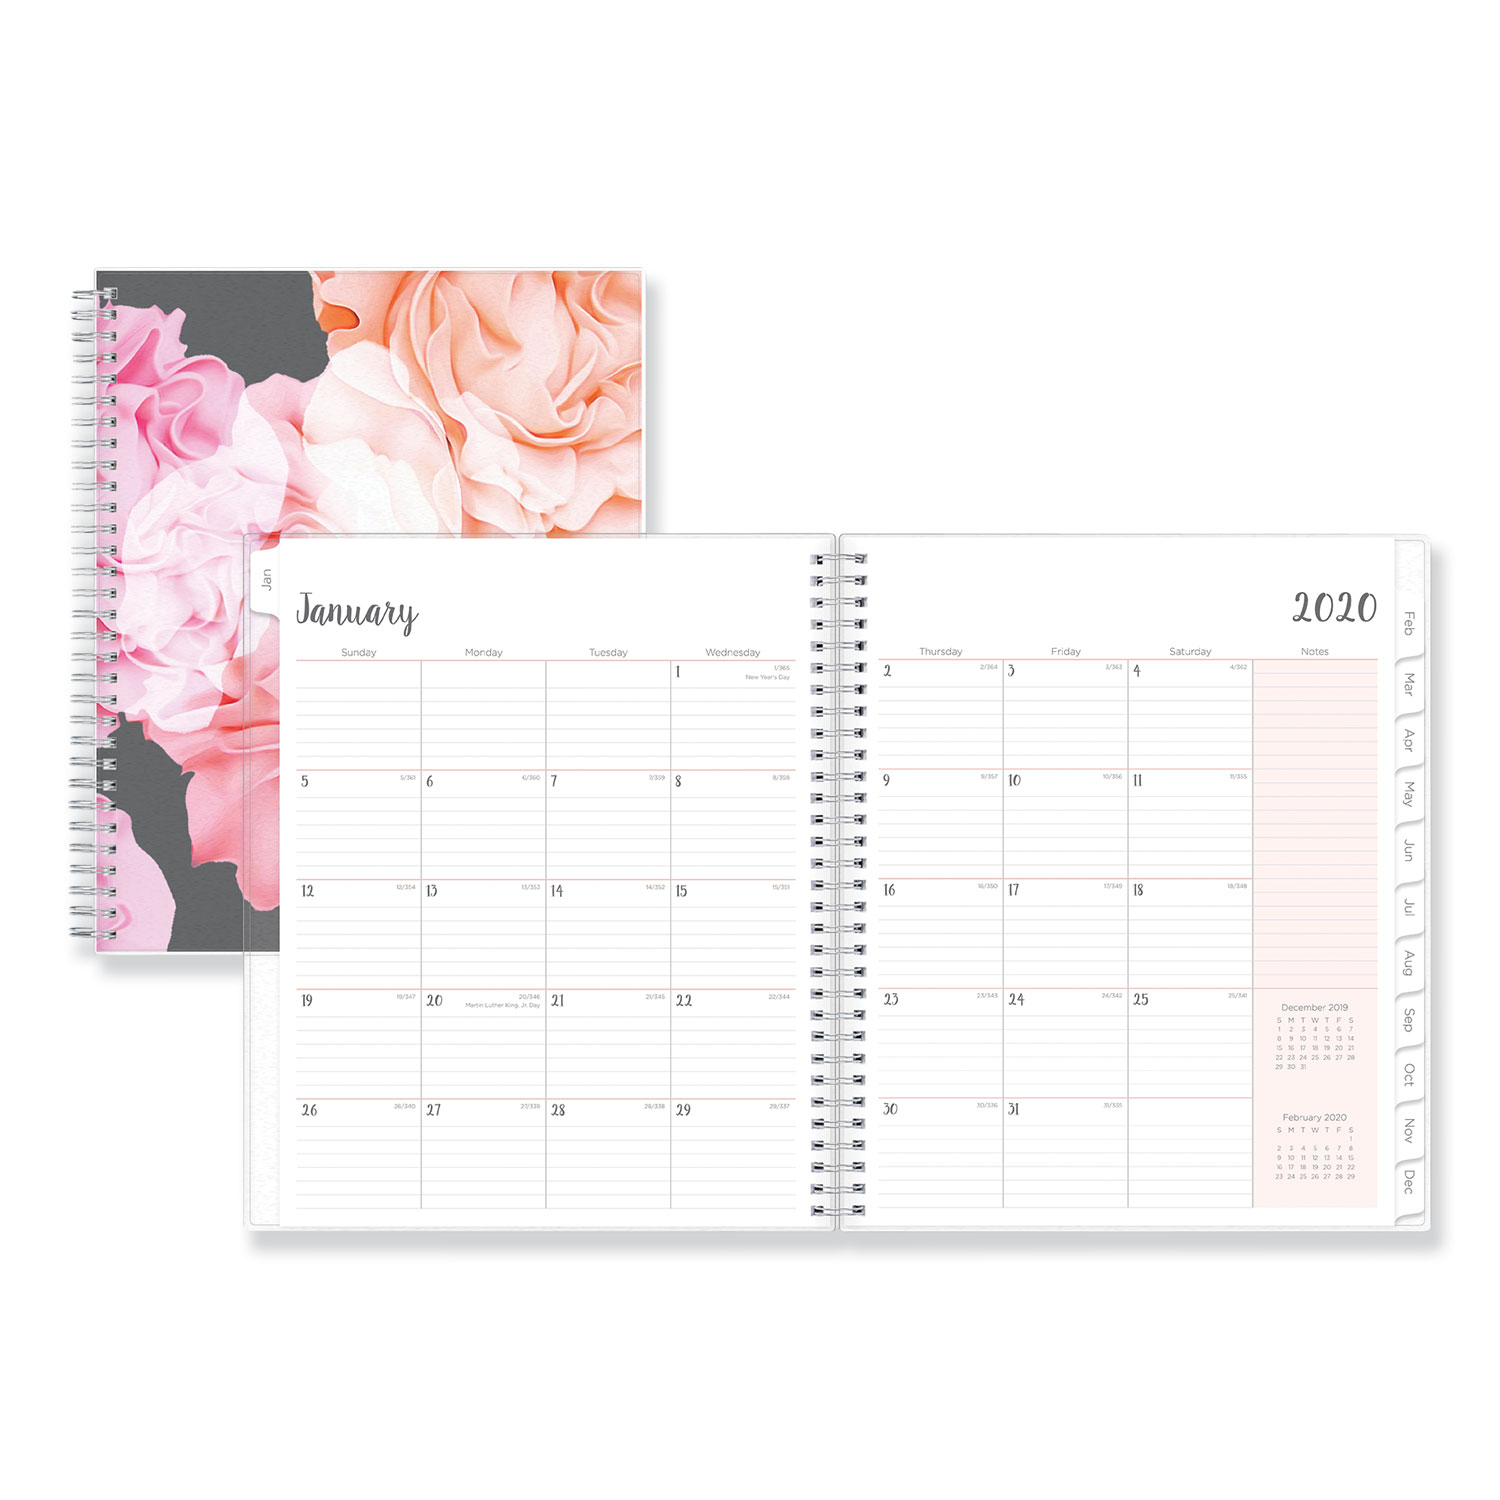  Blue Sky 110395 Joselyn Monthly Wirebound Planner, 10 x 8, Light Pink/Peach/Black, 2020 (BLS110395) 